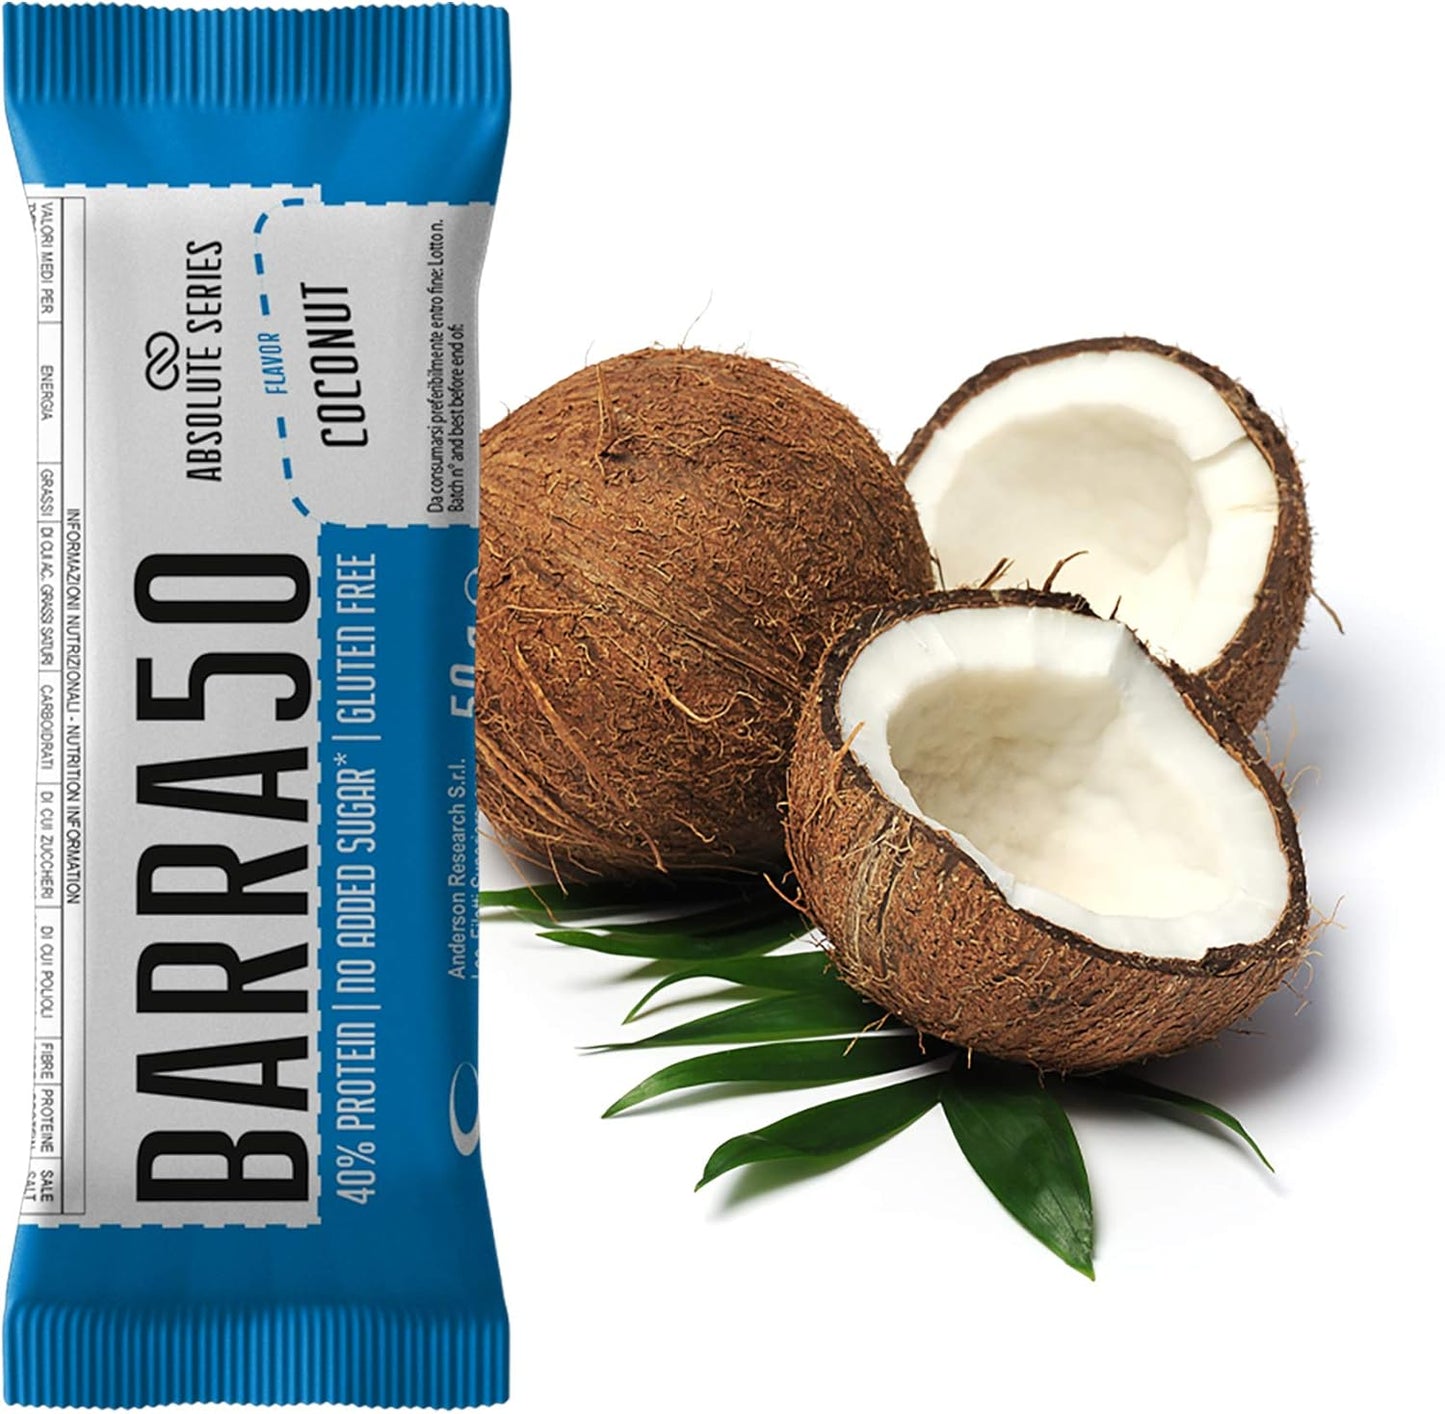 Anderson Absolute Series BARRA 50 - Barrette proteiche 50g senza Glutine 50% proteine - Punto Fitness